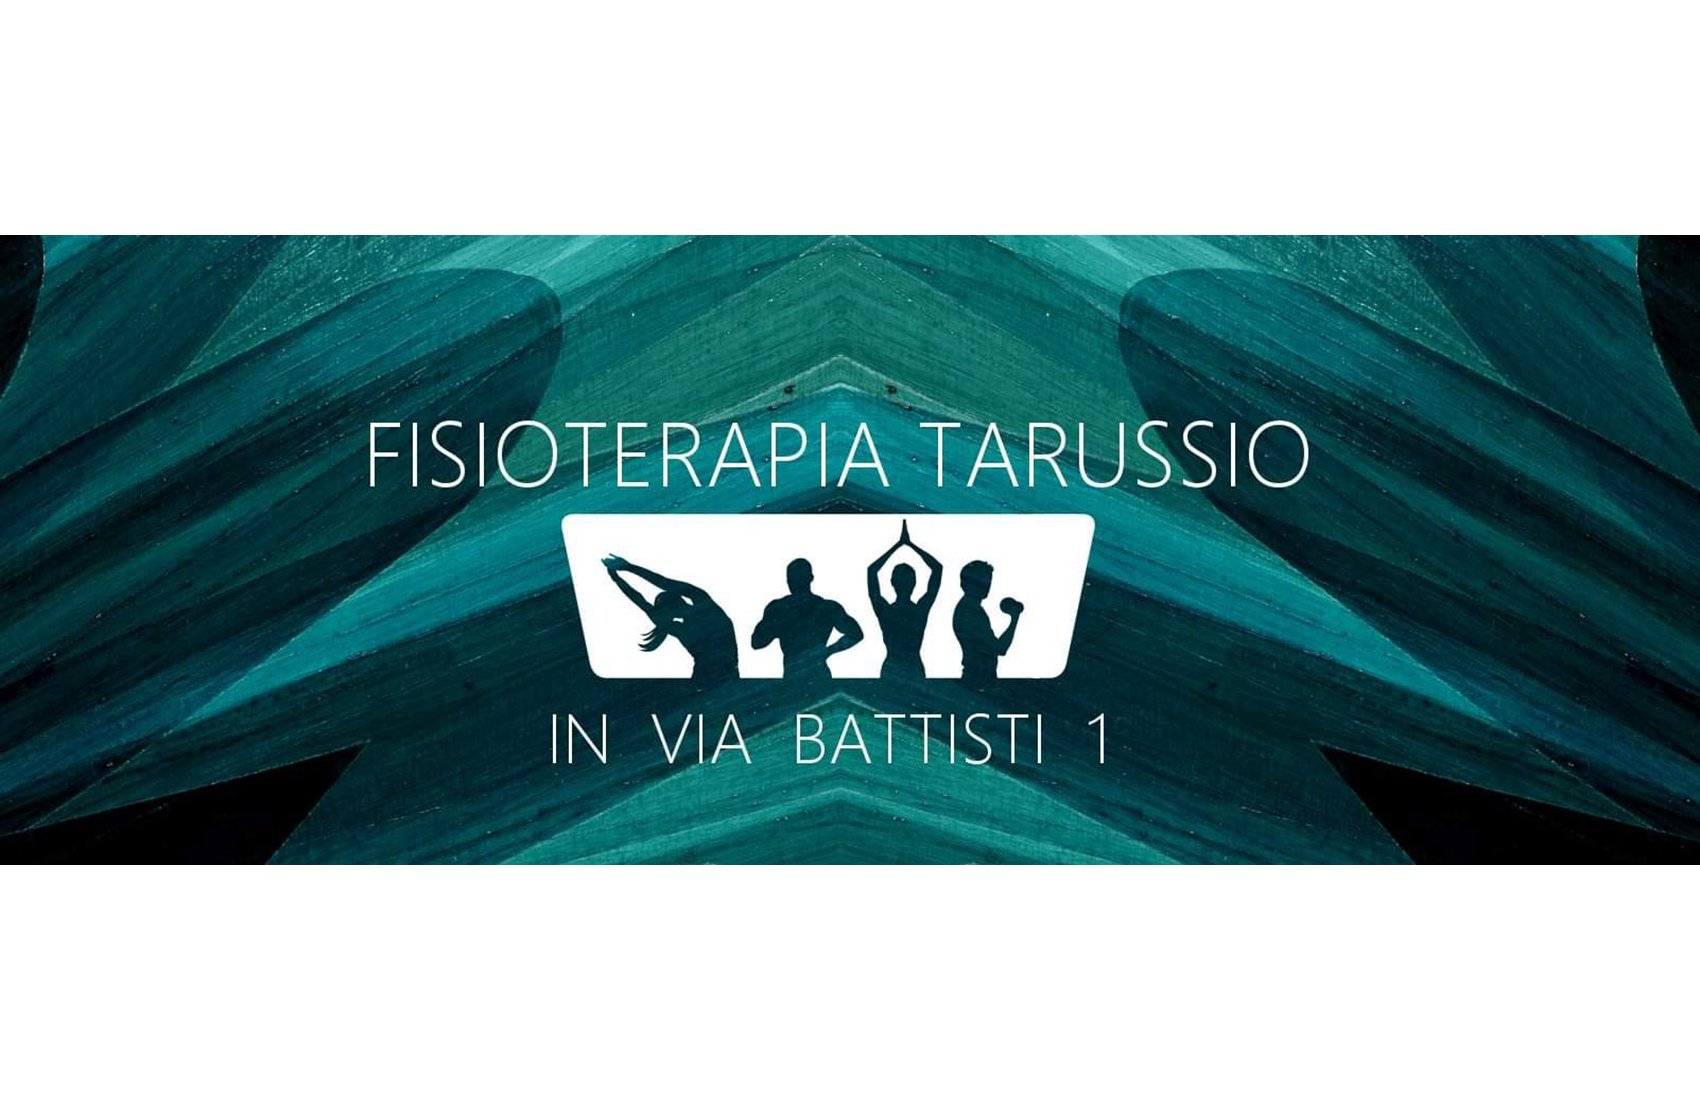 Fisioterapia Tarussio - Trieste - Trieste